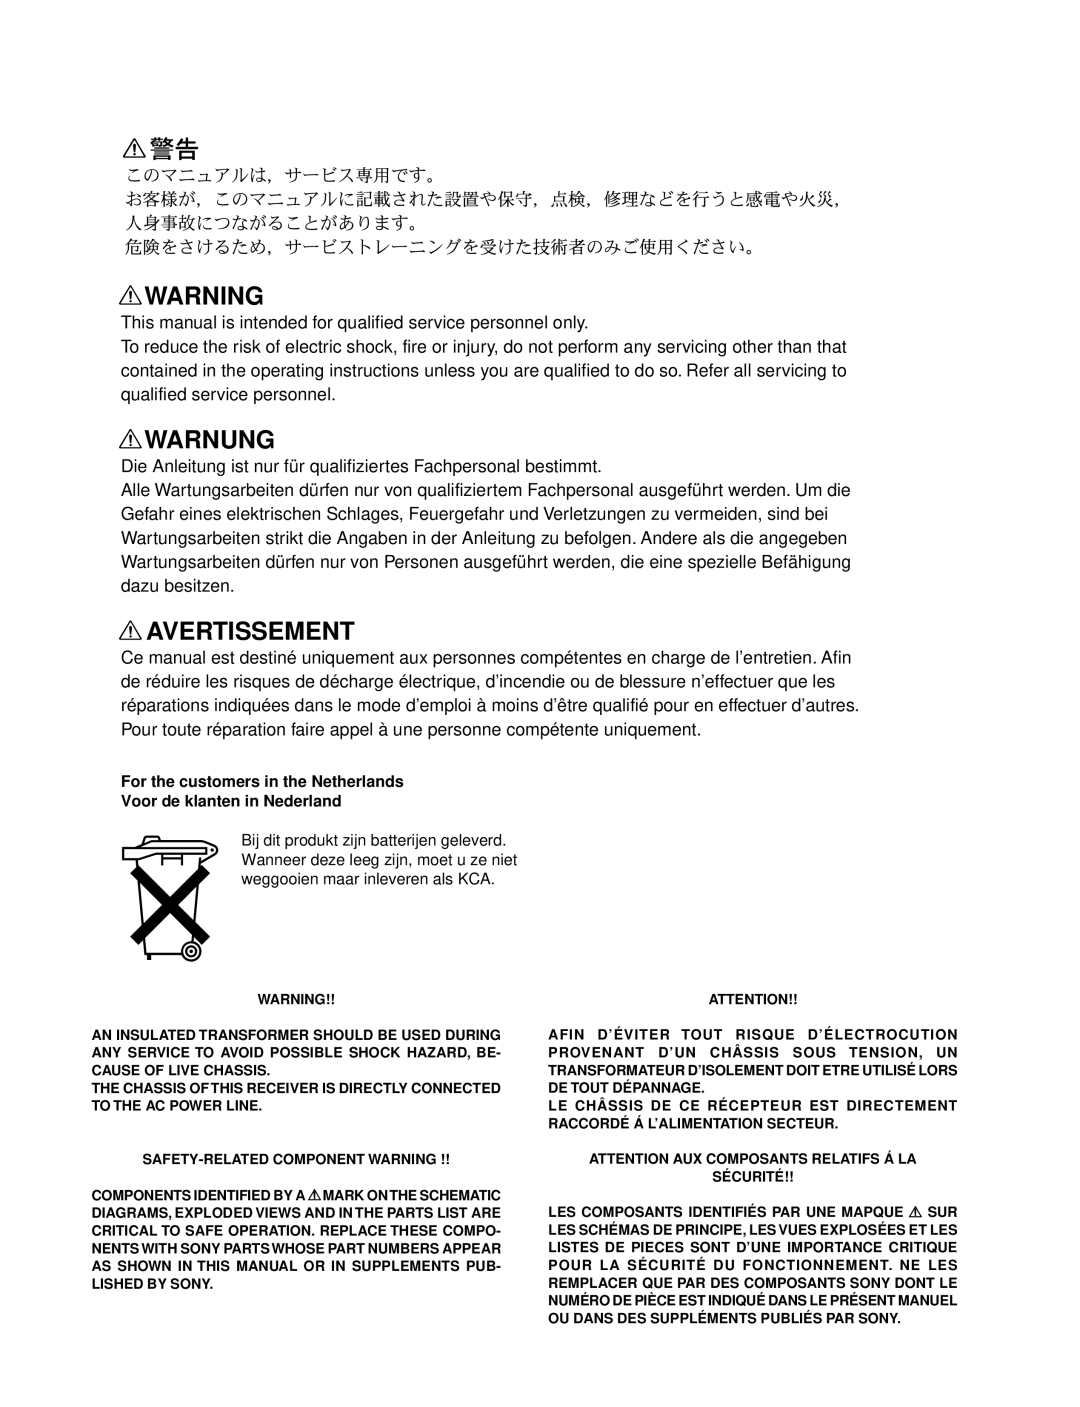 Sony RM-PJM10, VPL-CX1 service manual Warnung 